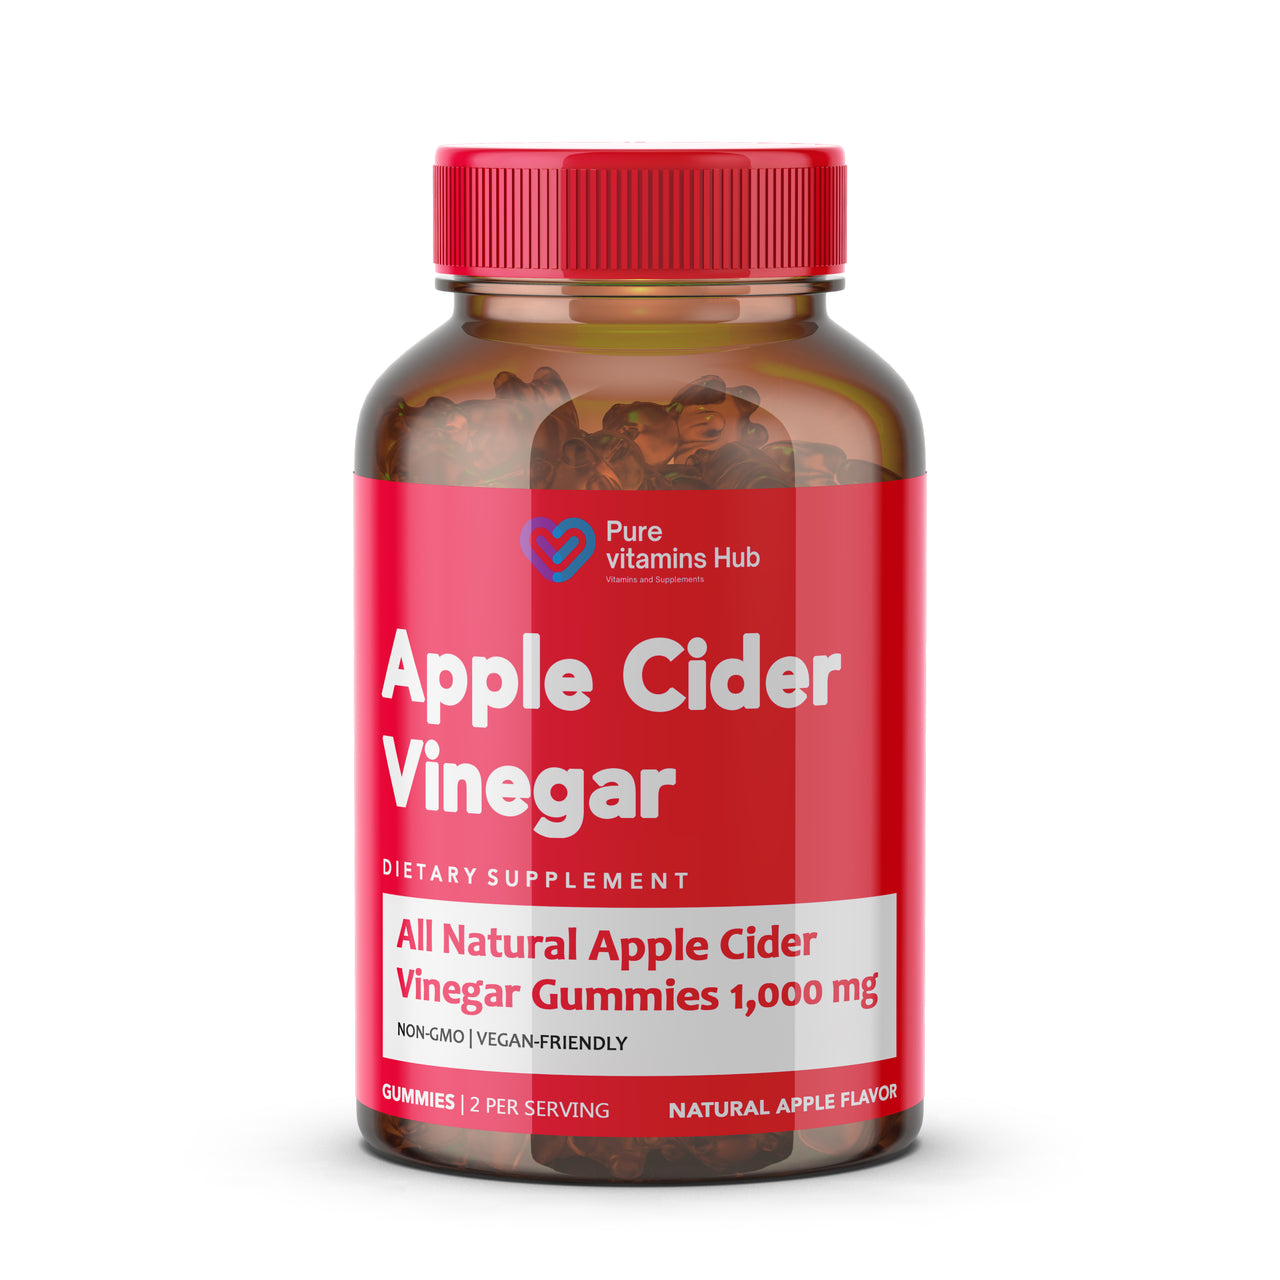 Apple Cider Vinegar gummies